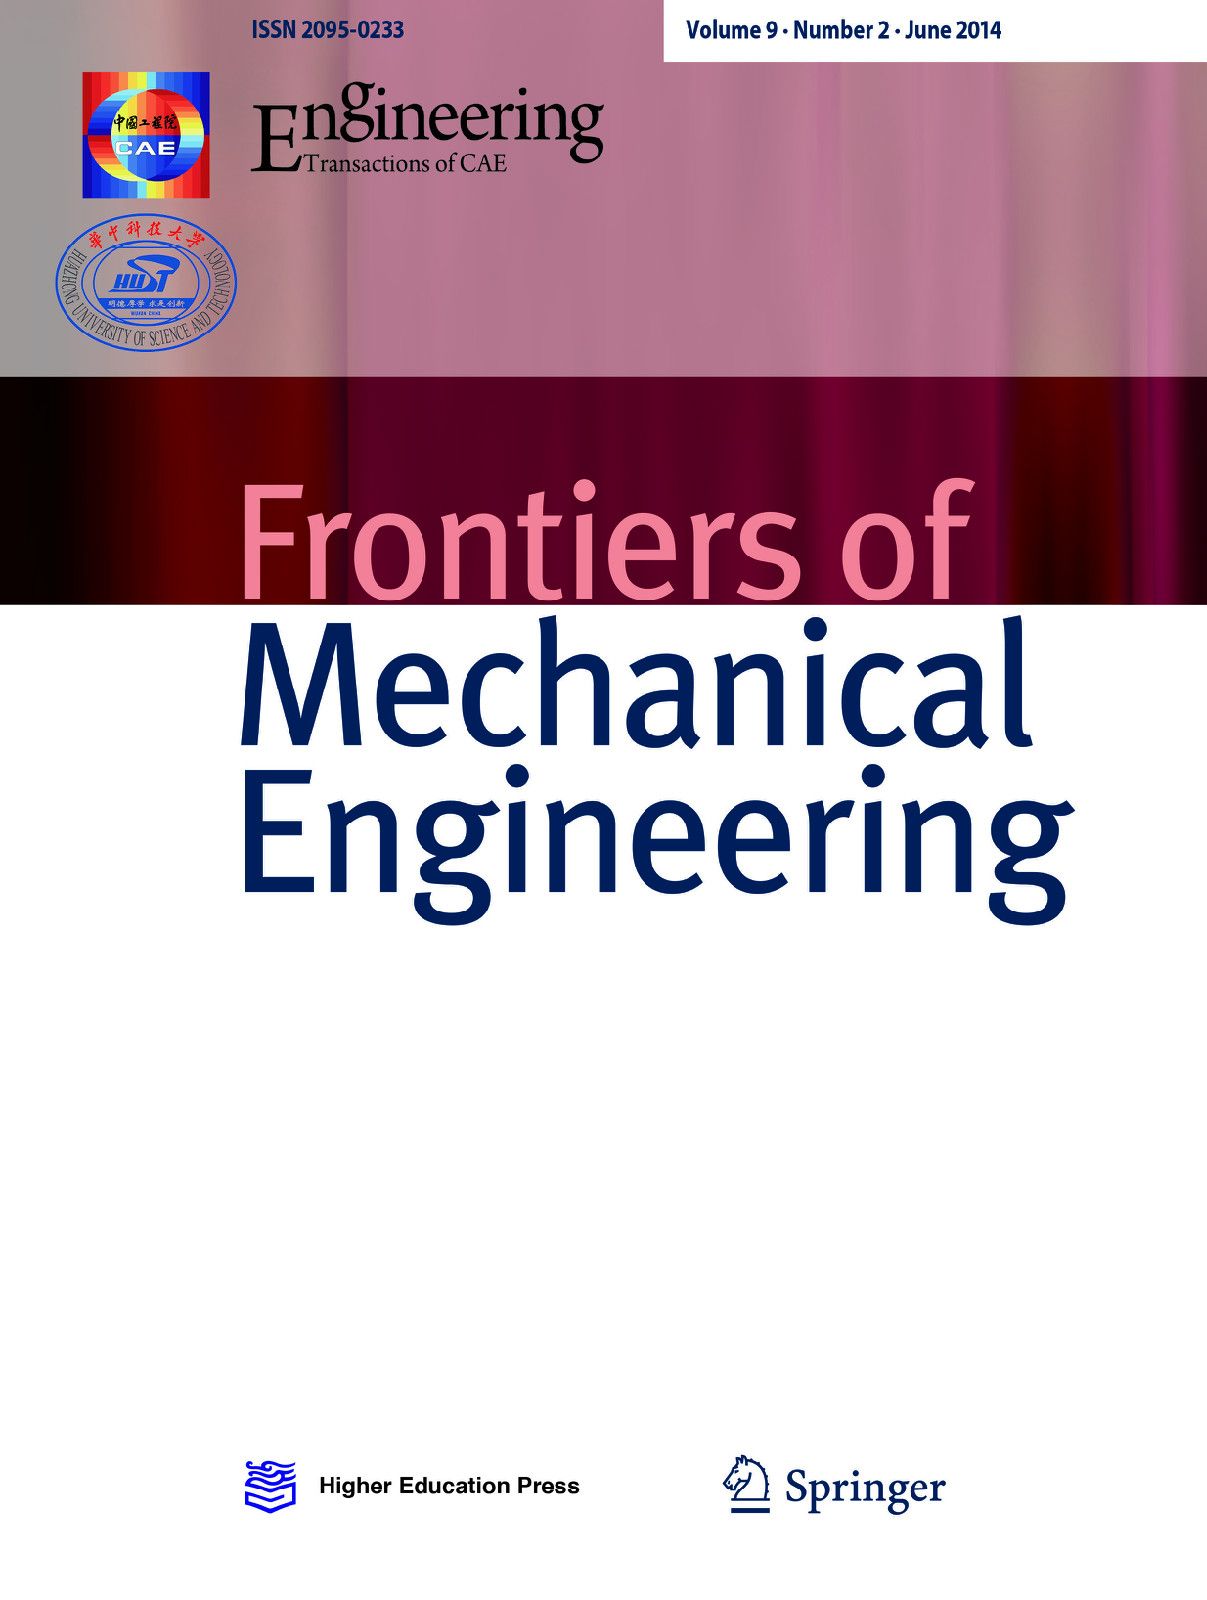 Frontiers of Mechanical Engineering